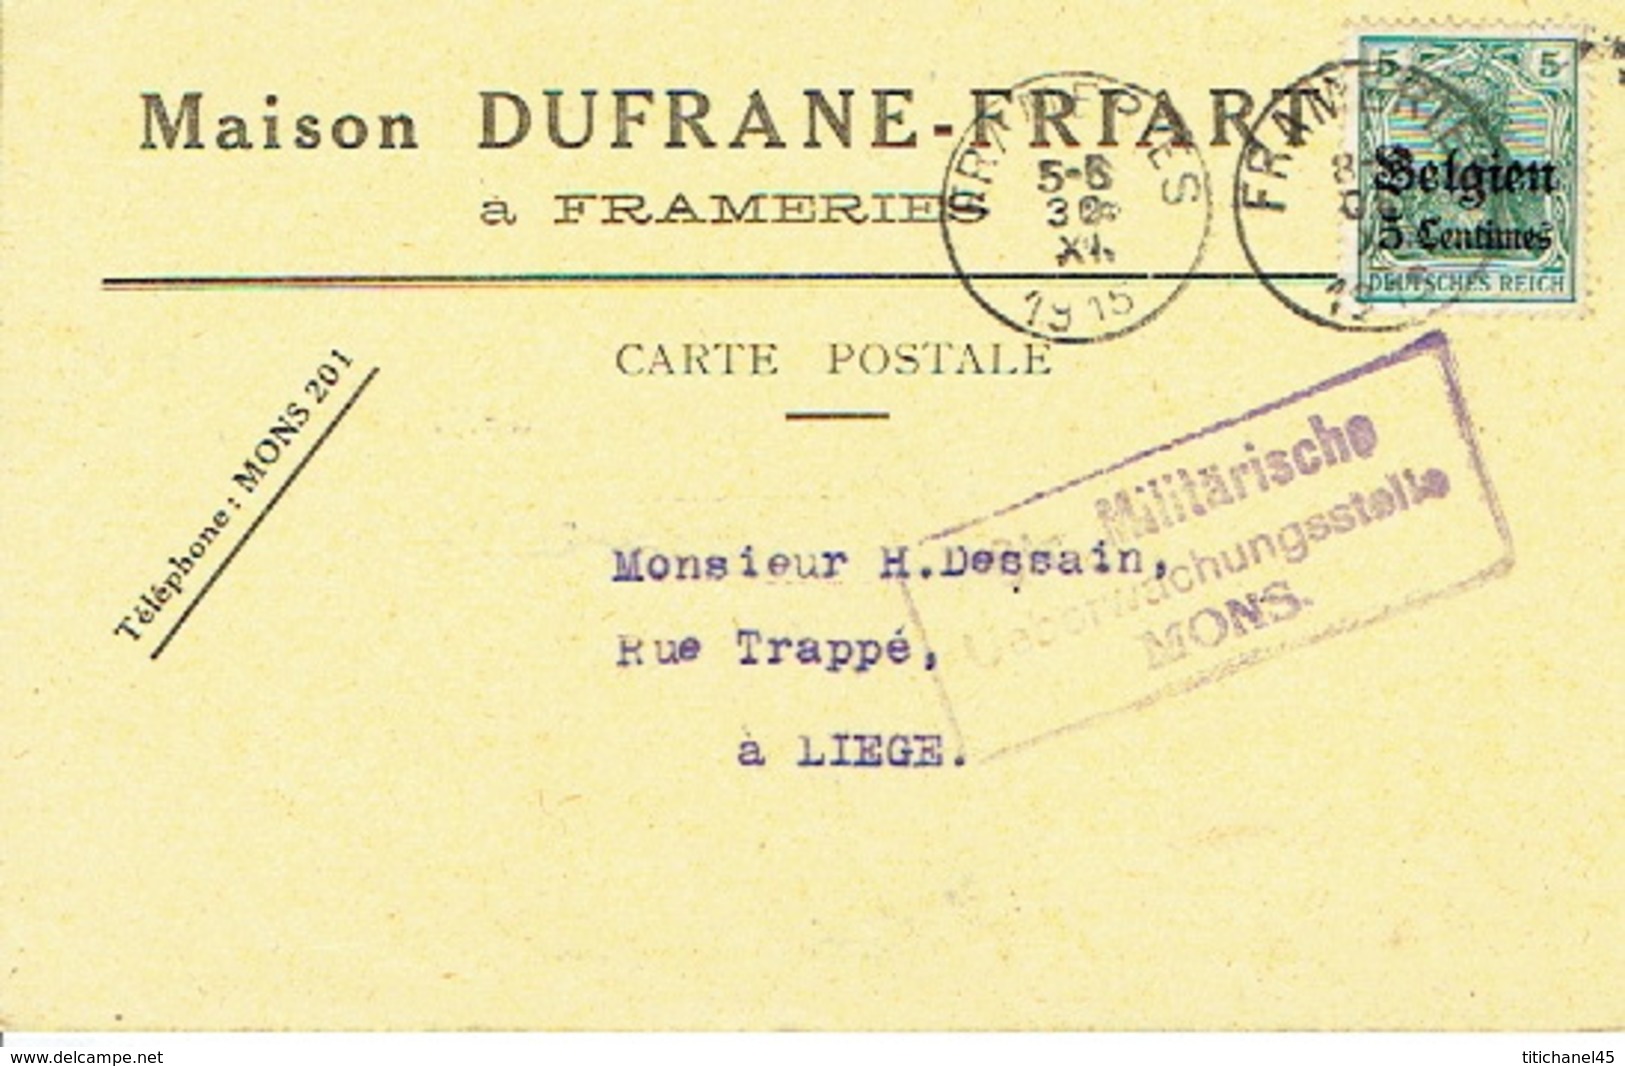 CP Publicitaire Germania  CHIMAY 1915 - Censure CHARLEROI  - Entête  L. DUVAL-LEURQUIN Imprimerie-lithographie-papeterie - Chimay